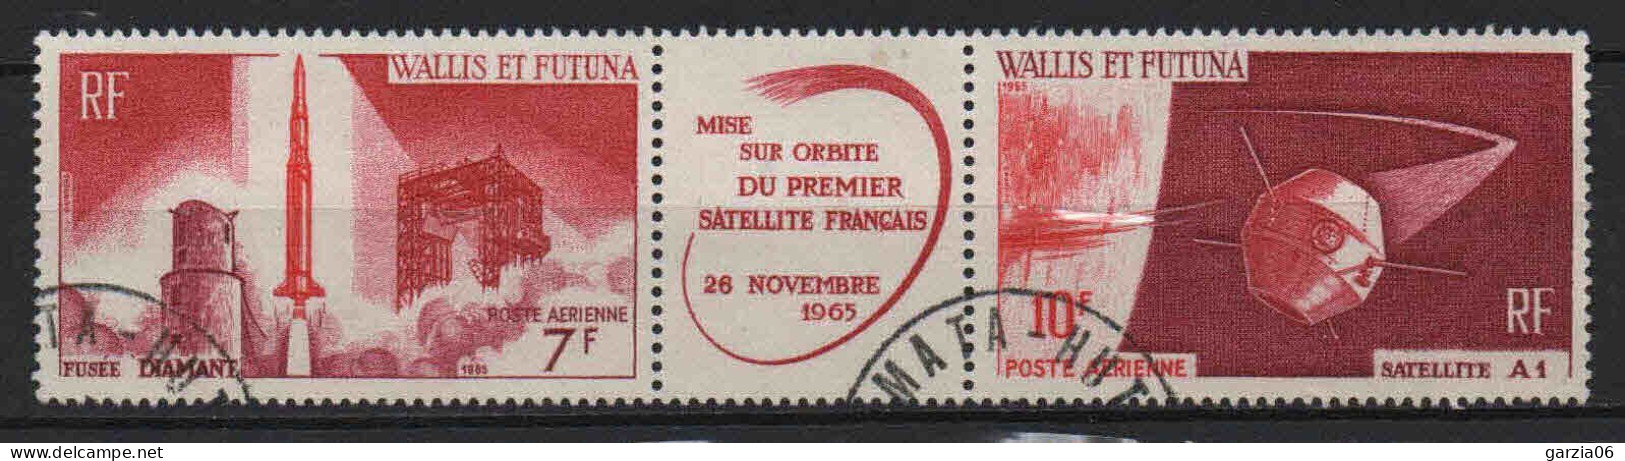 Wallis Et Futuna  - 1965  -  1ier Satellite Français  - PA 24/25A - Oblit - Used - Gebruikt